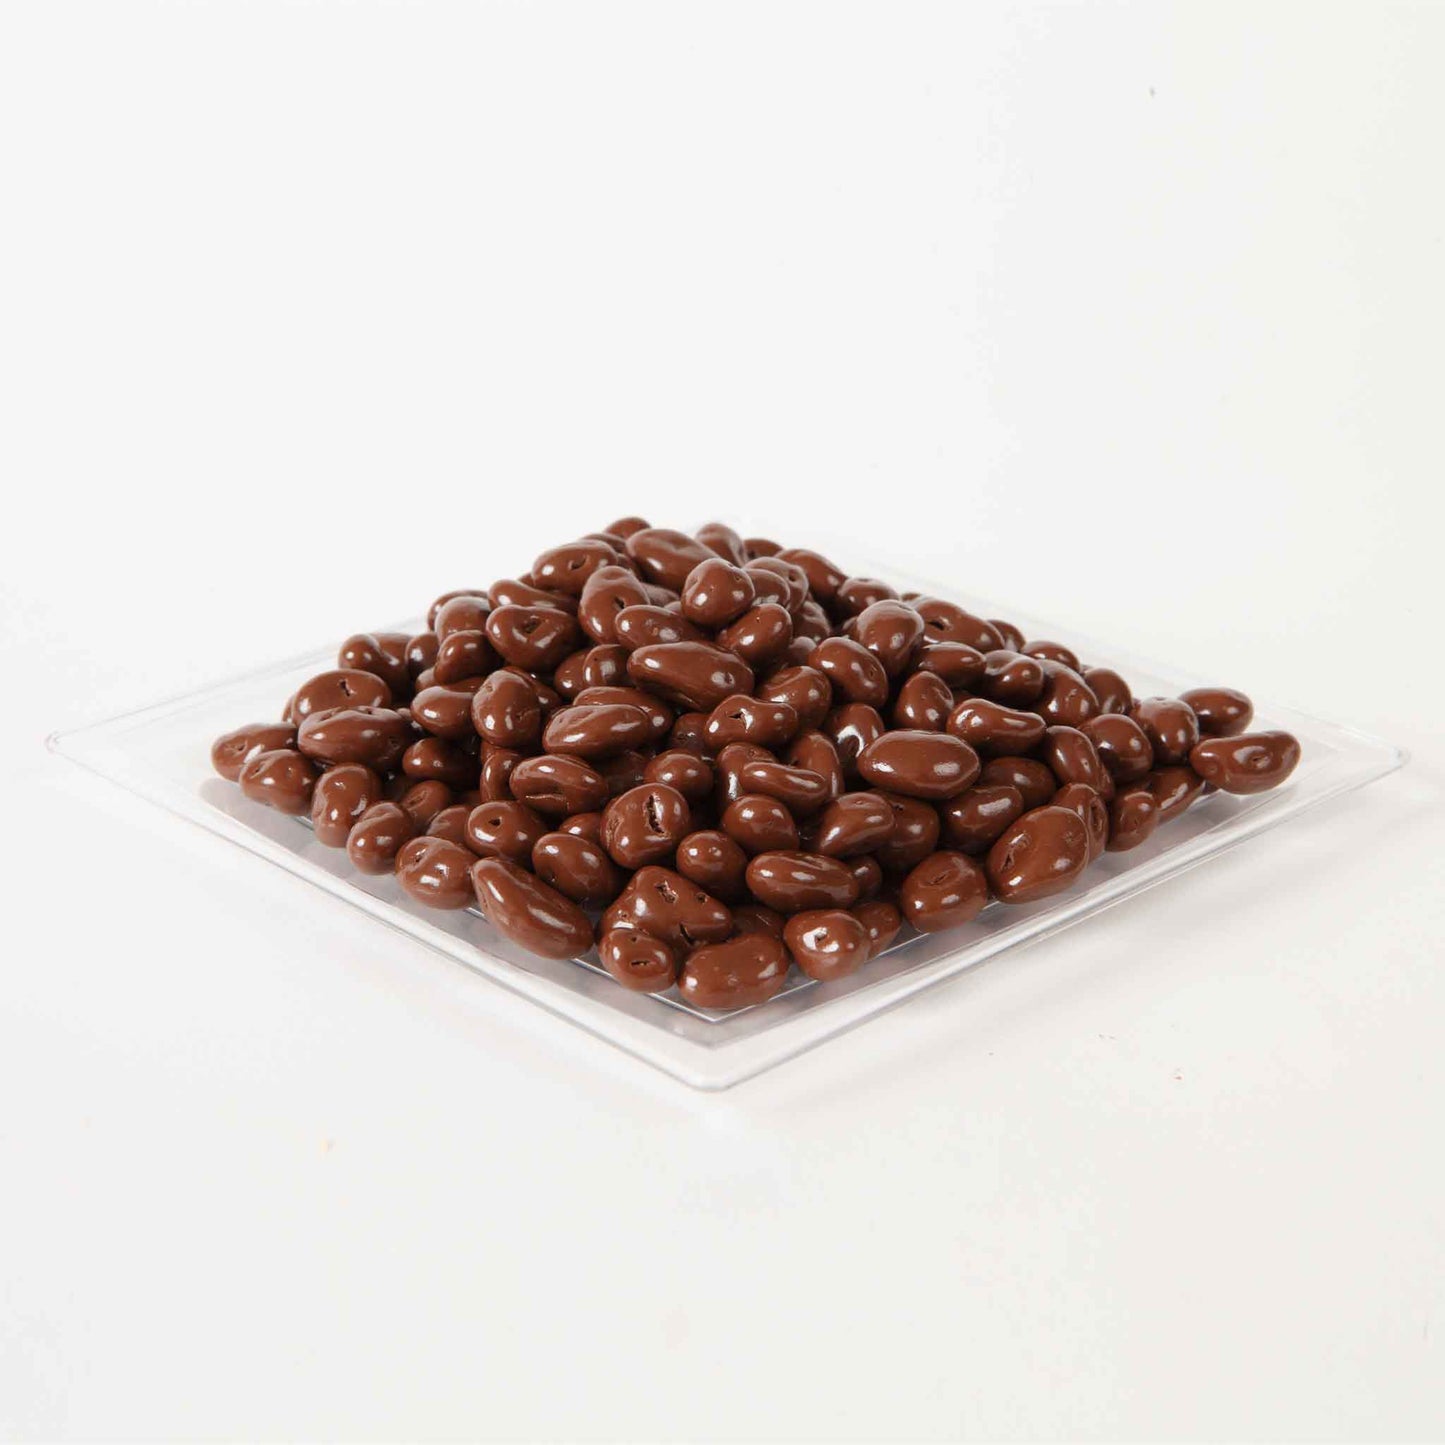 Chocolate Covered Raisins NSA No Sugar Added Glass Tray